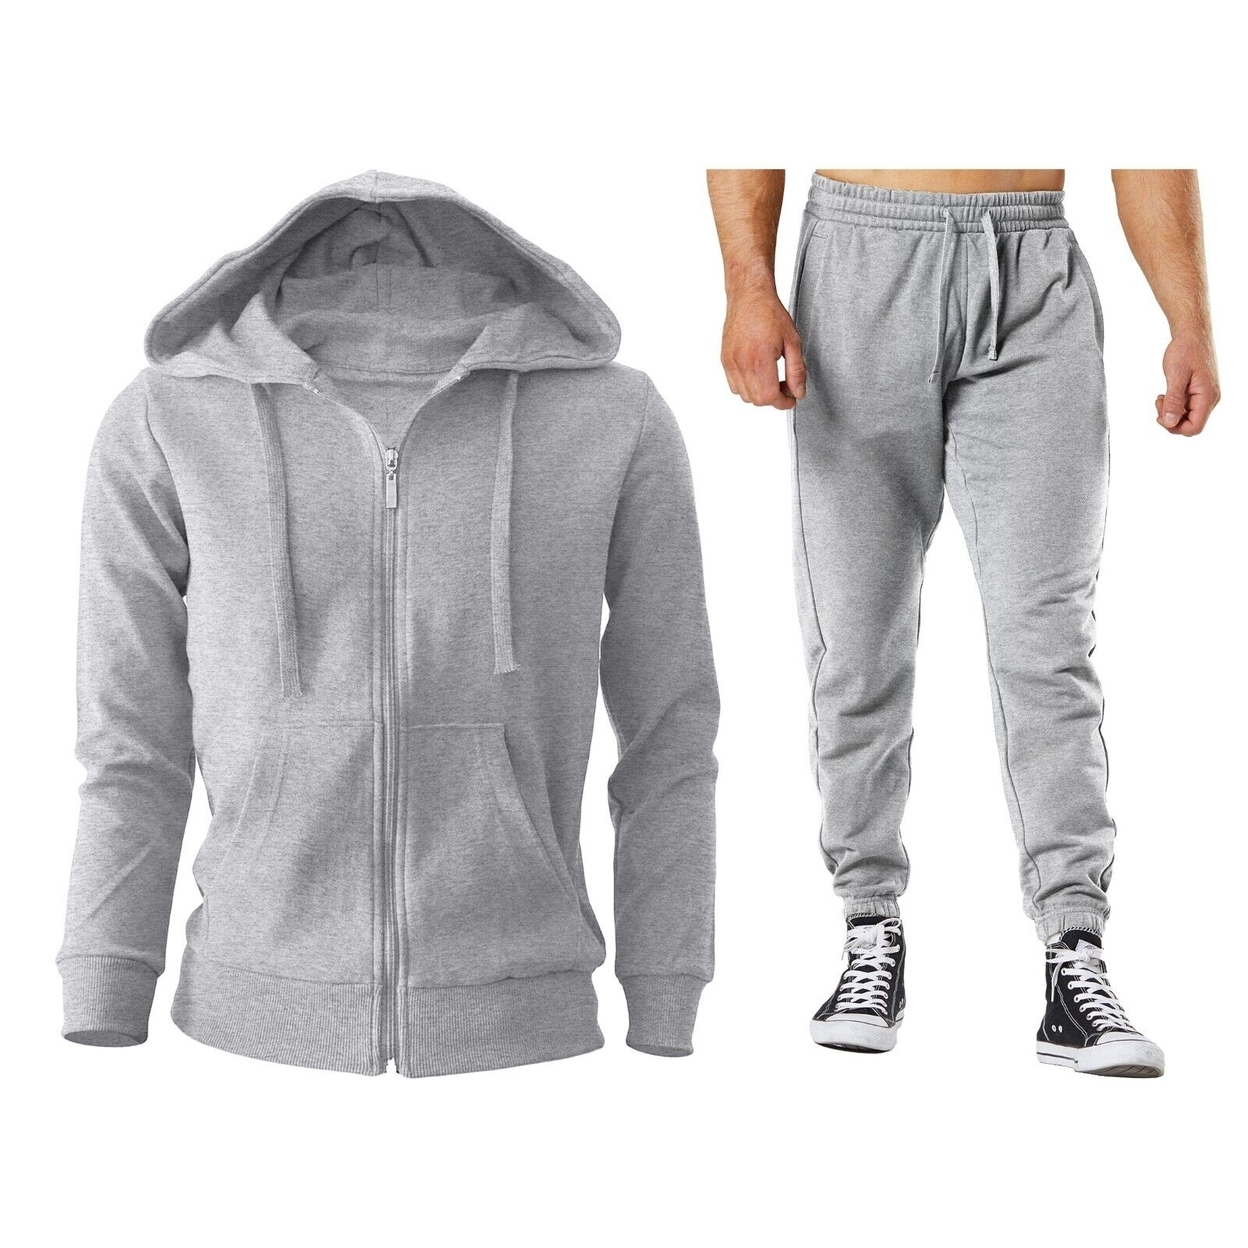 2-Piece: Men's Winter Warm Cozy Athletic Multi-Pockets BIG & TALL Sweatsuit Set - Grey, 3xl